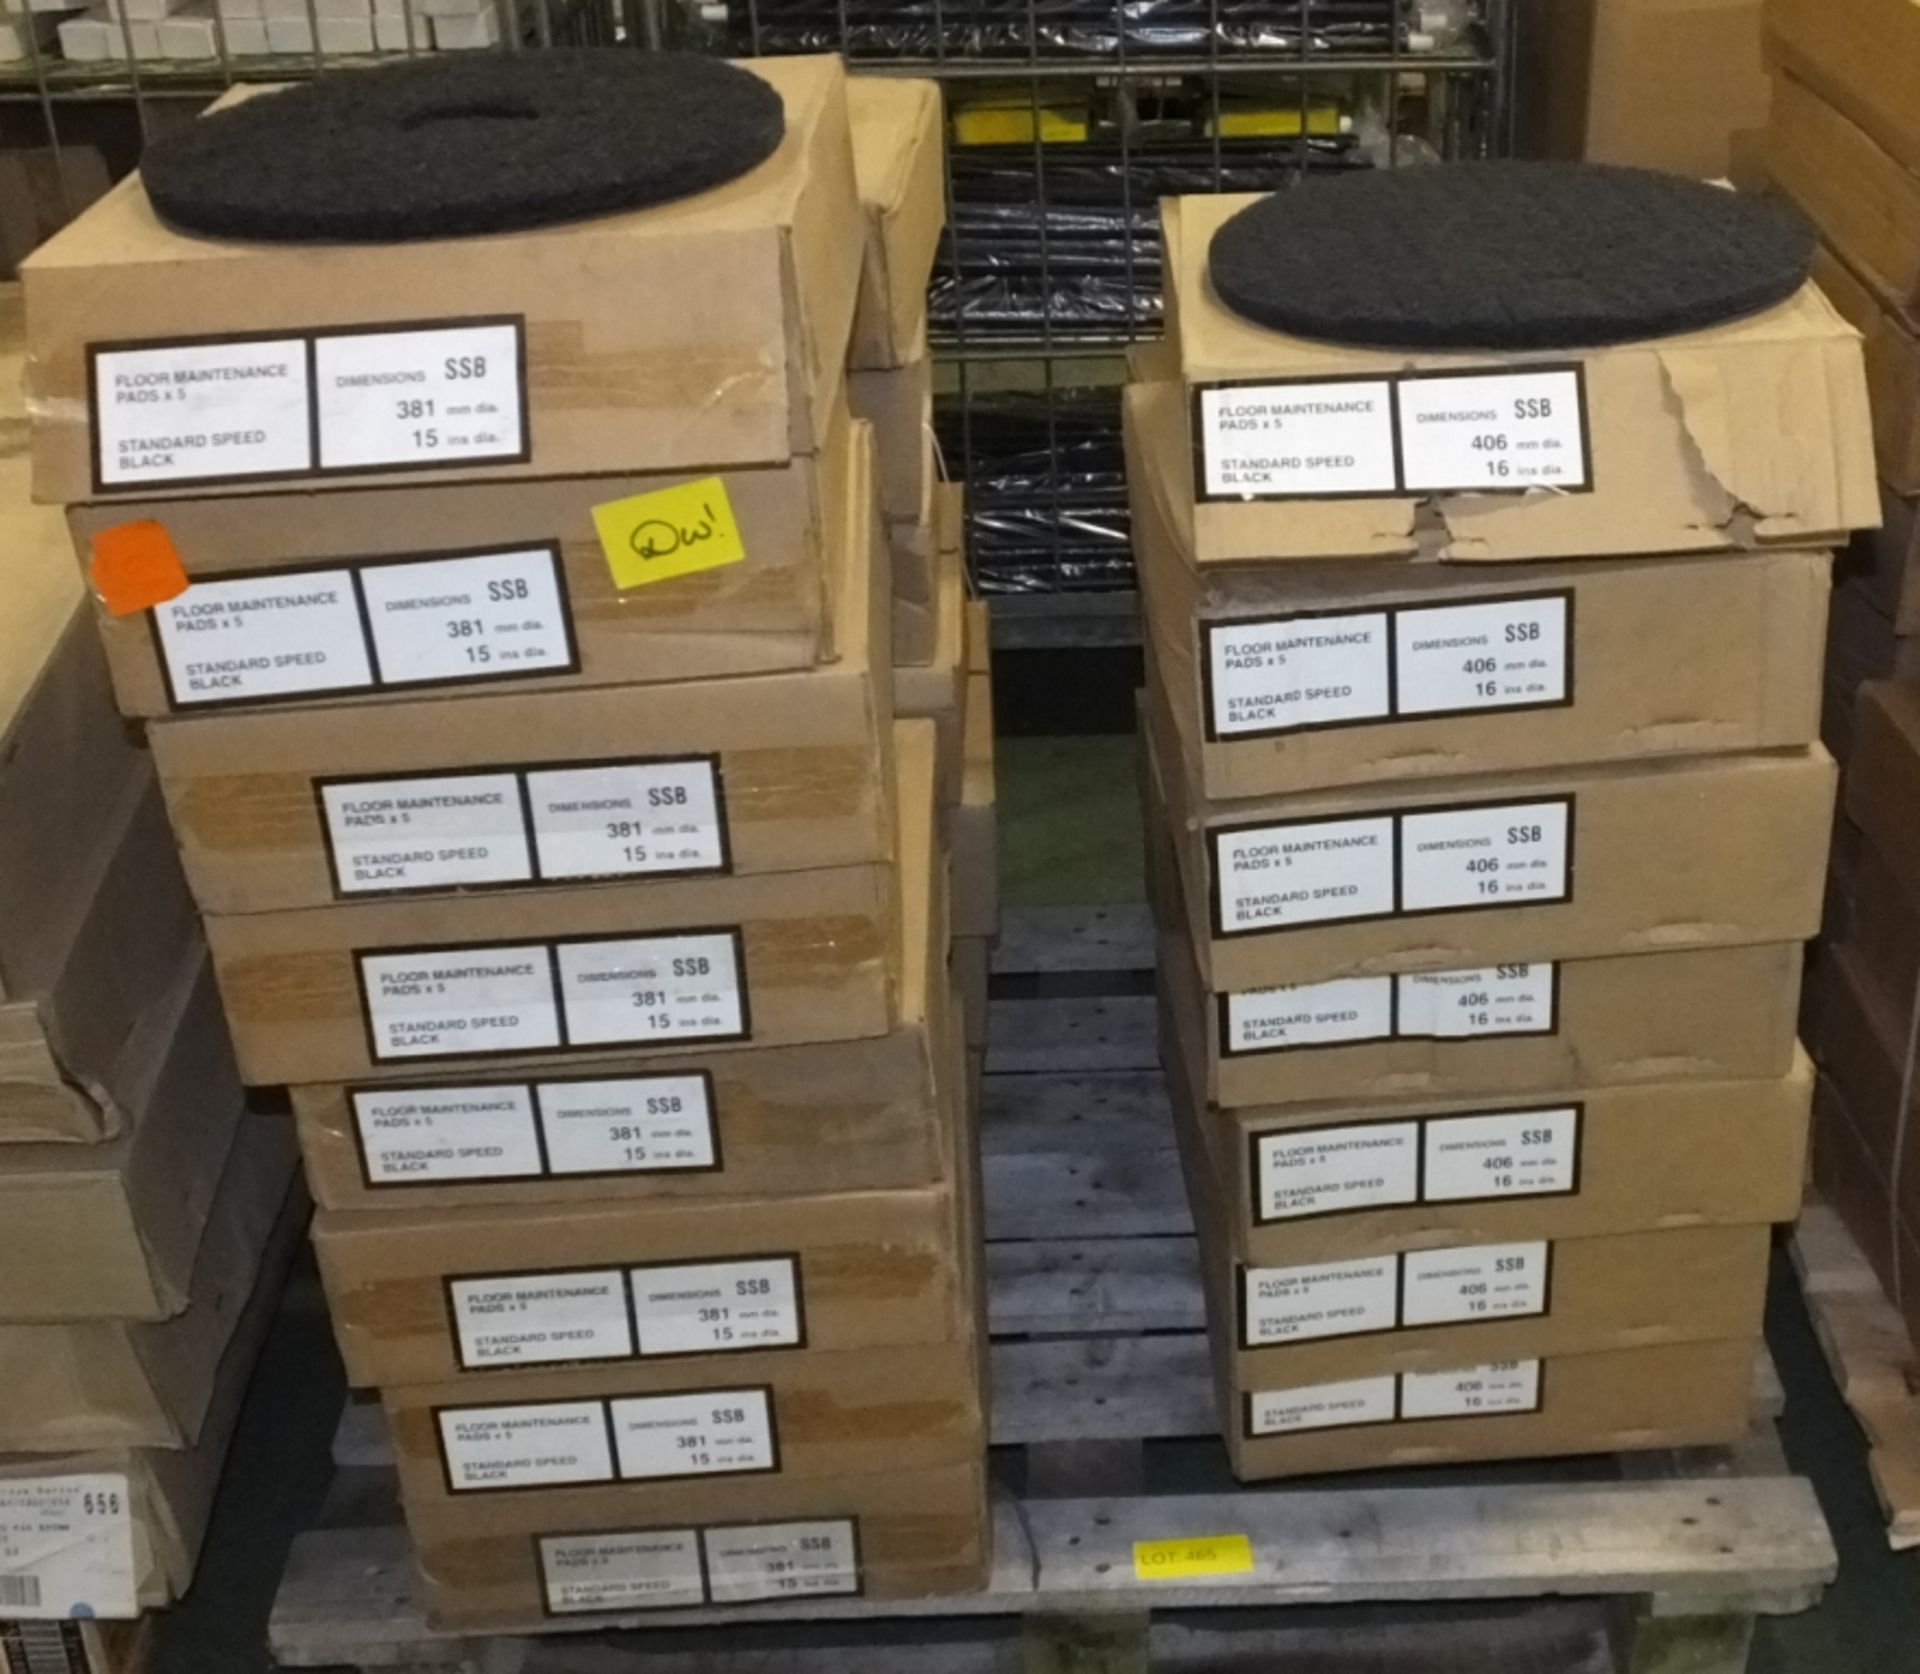 Floor Maintenance pads - Black - 5 per box - 28 boxes